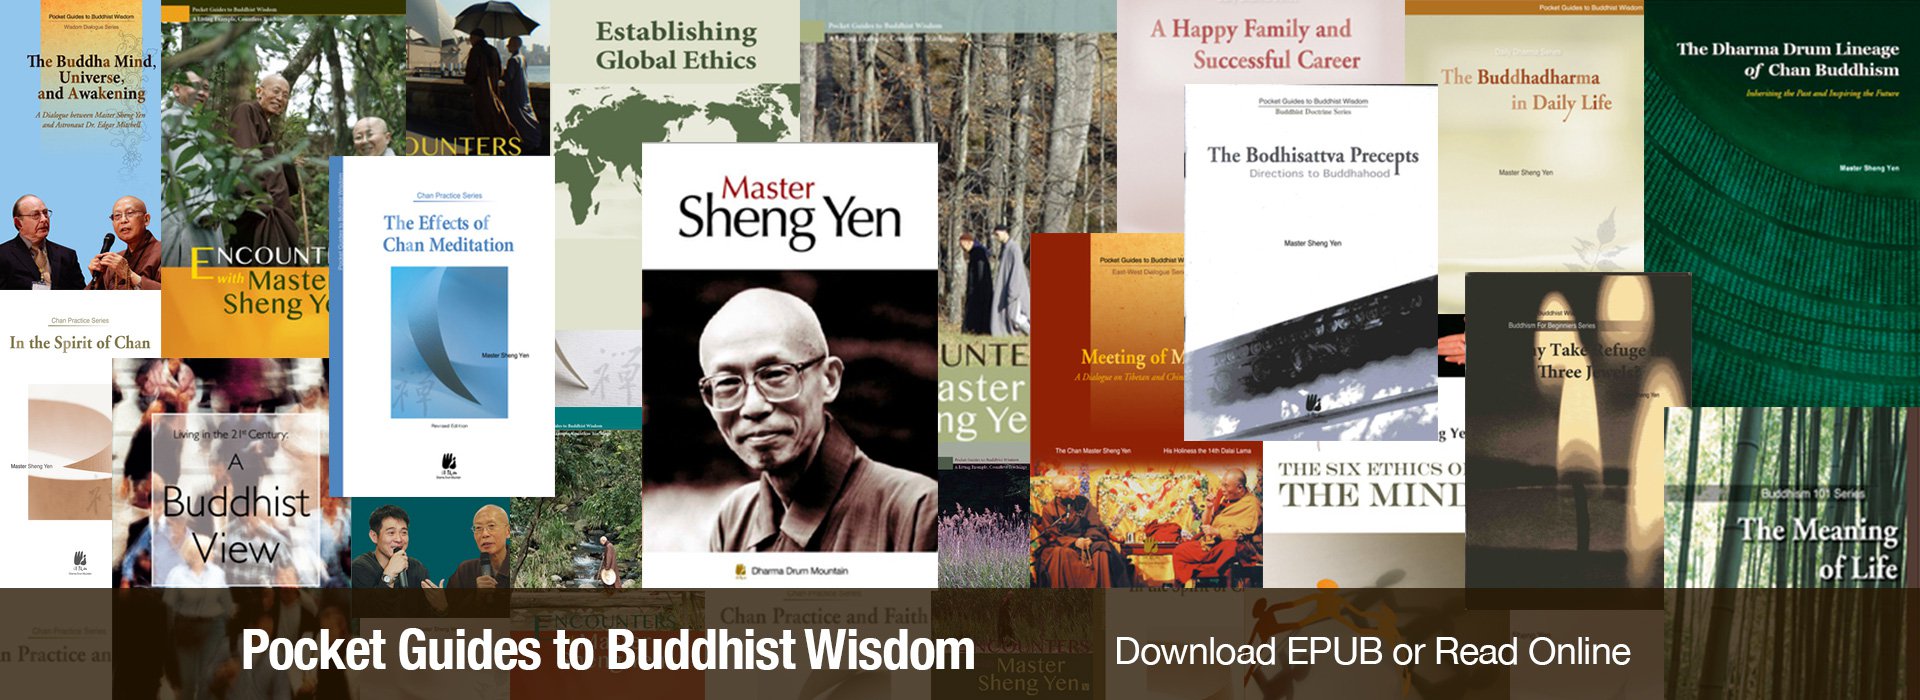 Pocket Guides to Buddhist Wisdom